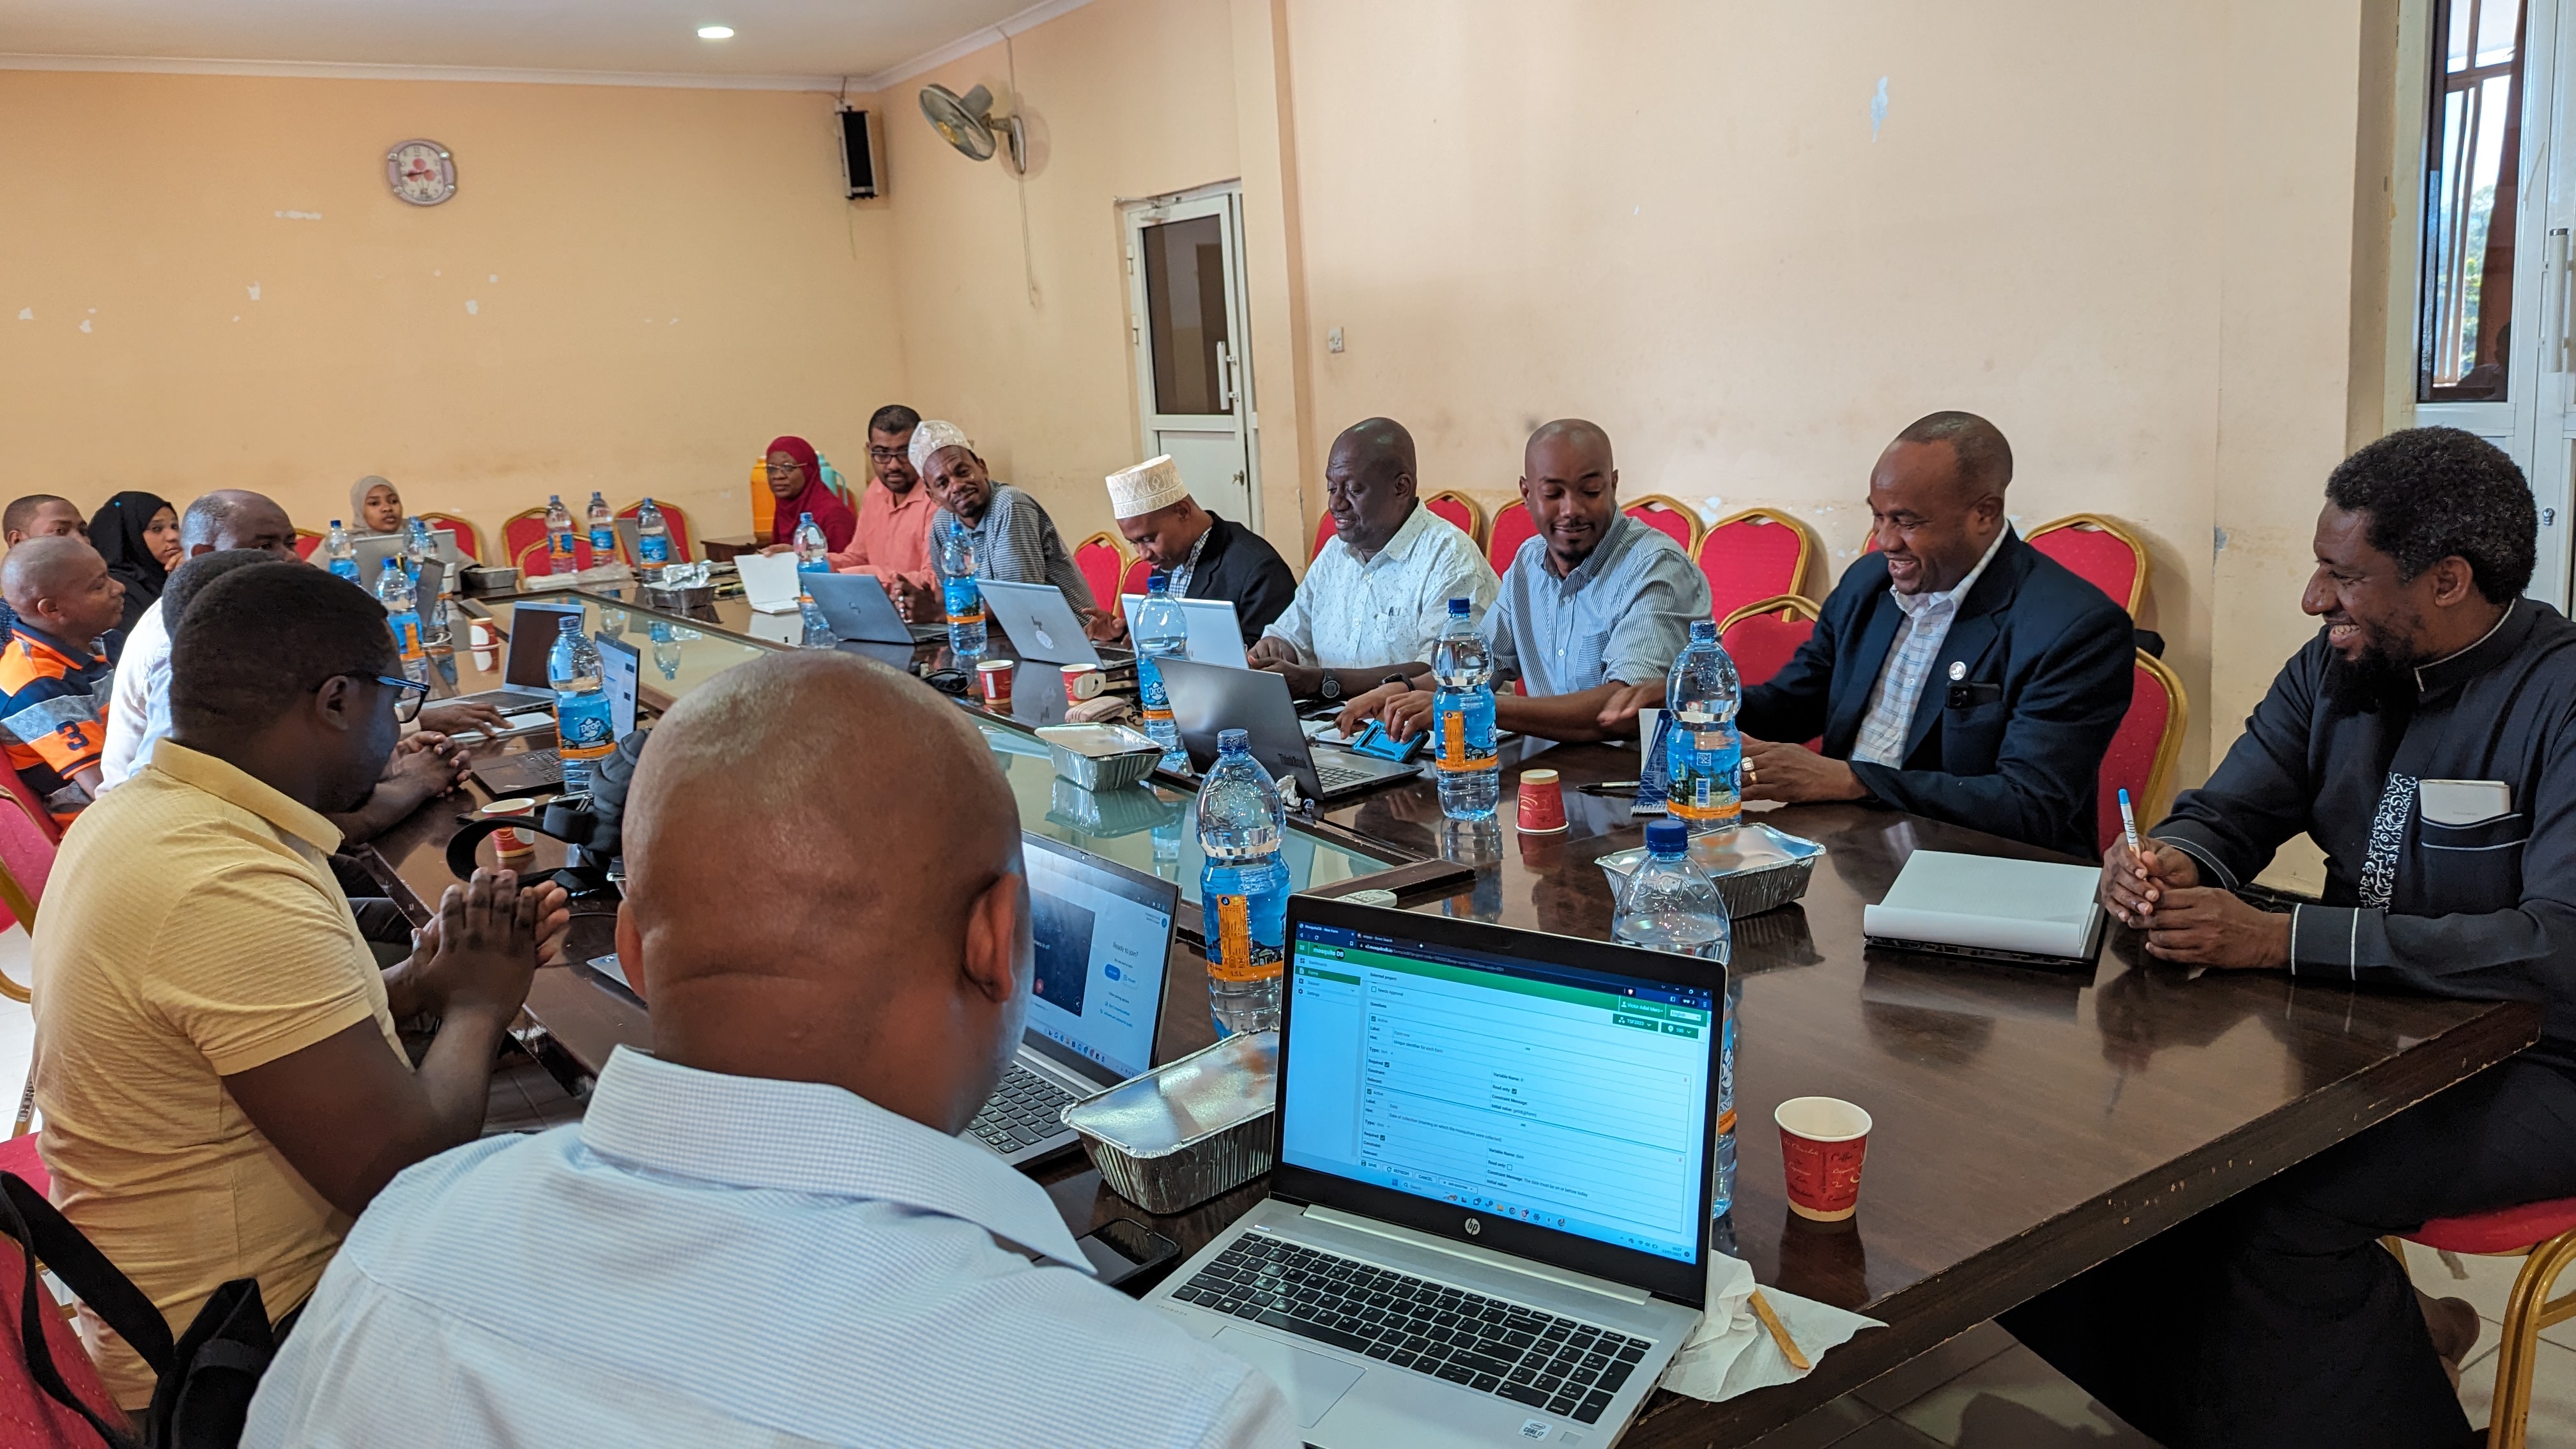 ENGAGEMENT: Data science team meets ZAMEP in Zanzibar